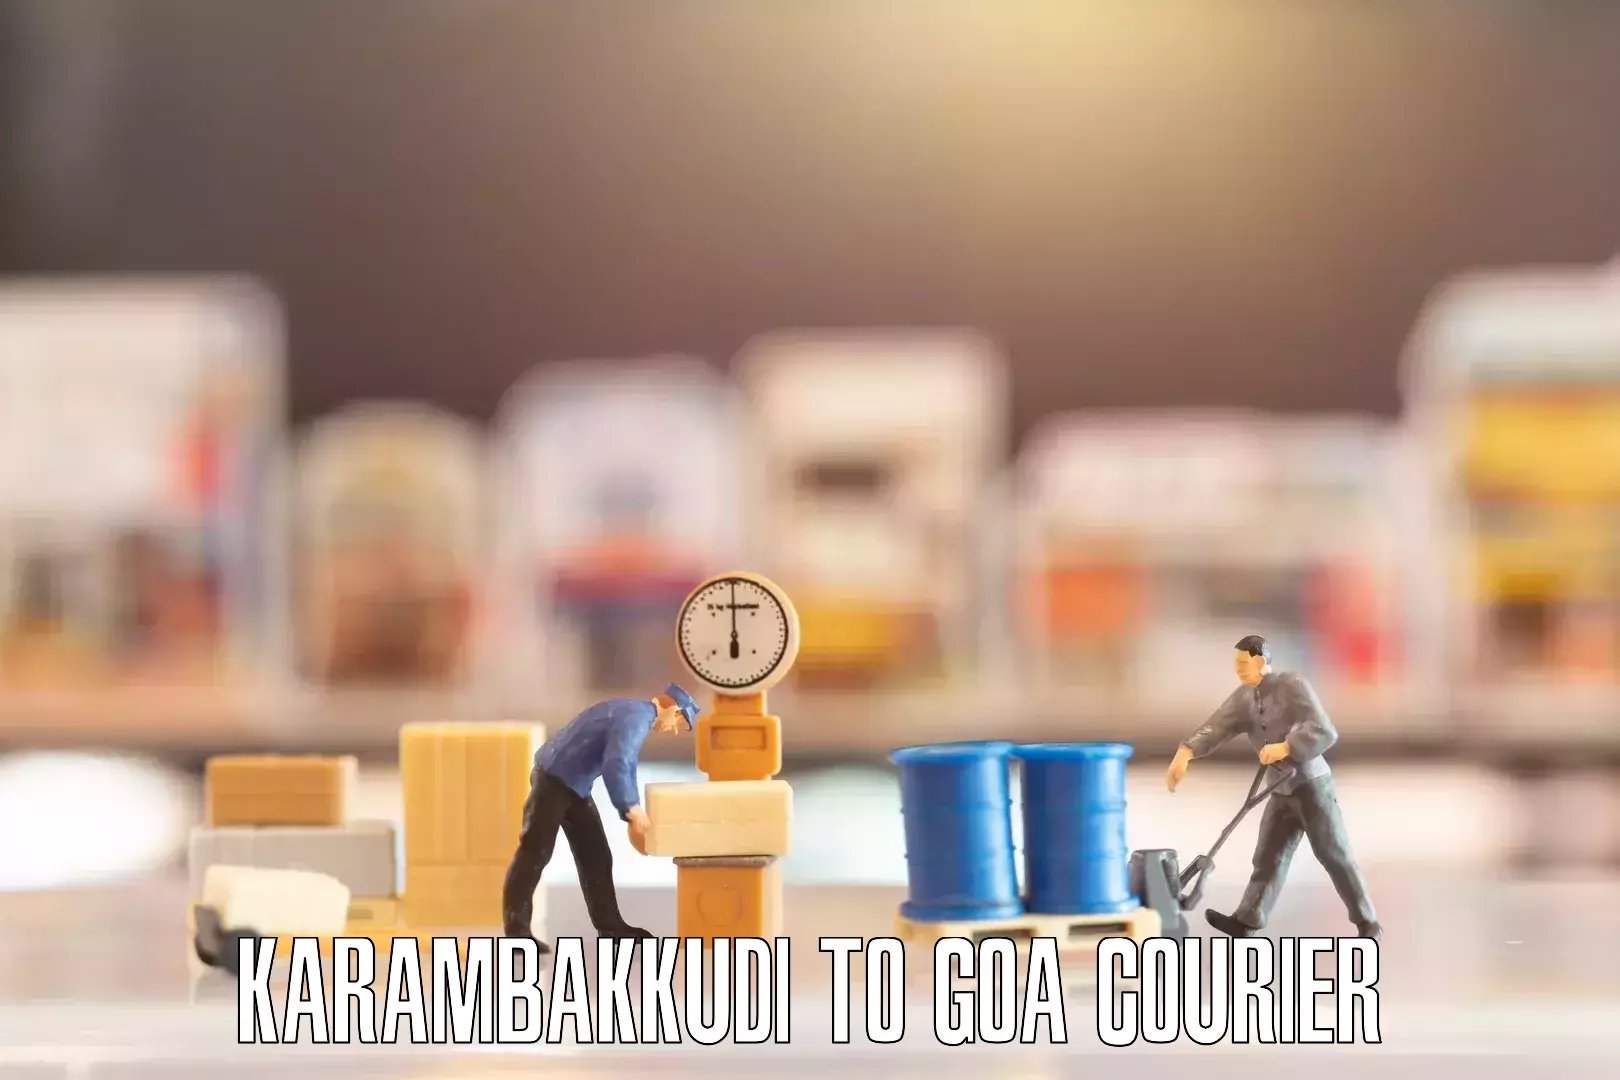 Moving and packing experts Karambakkudi to South Goa